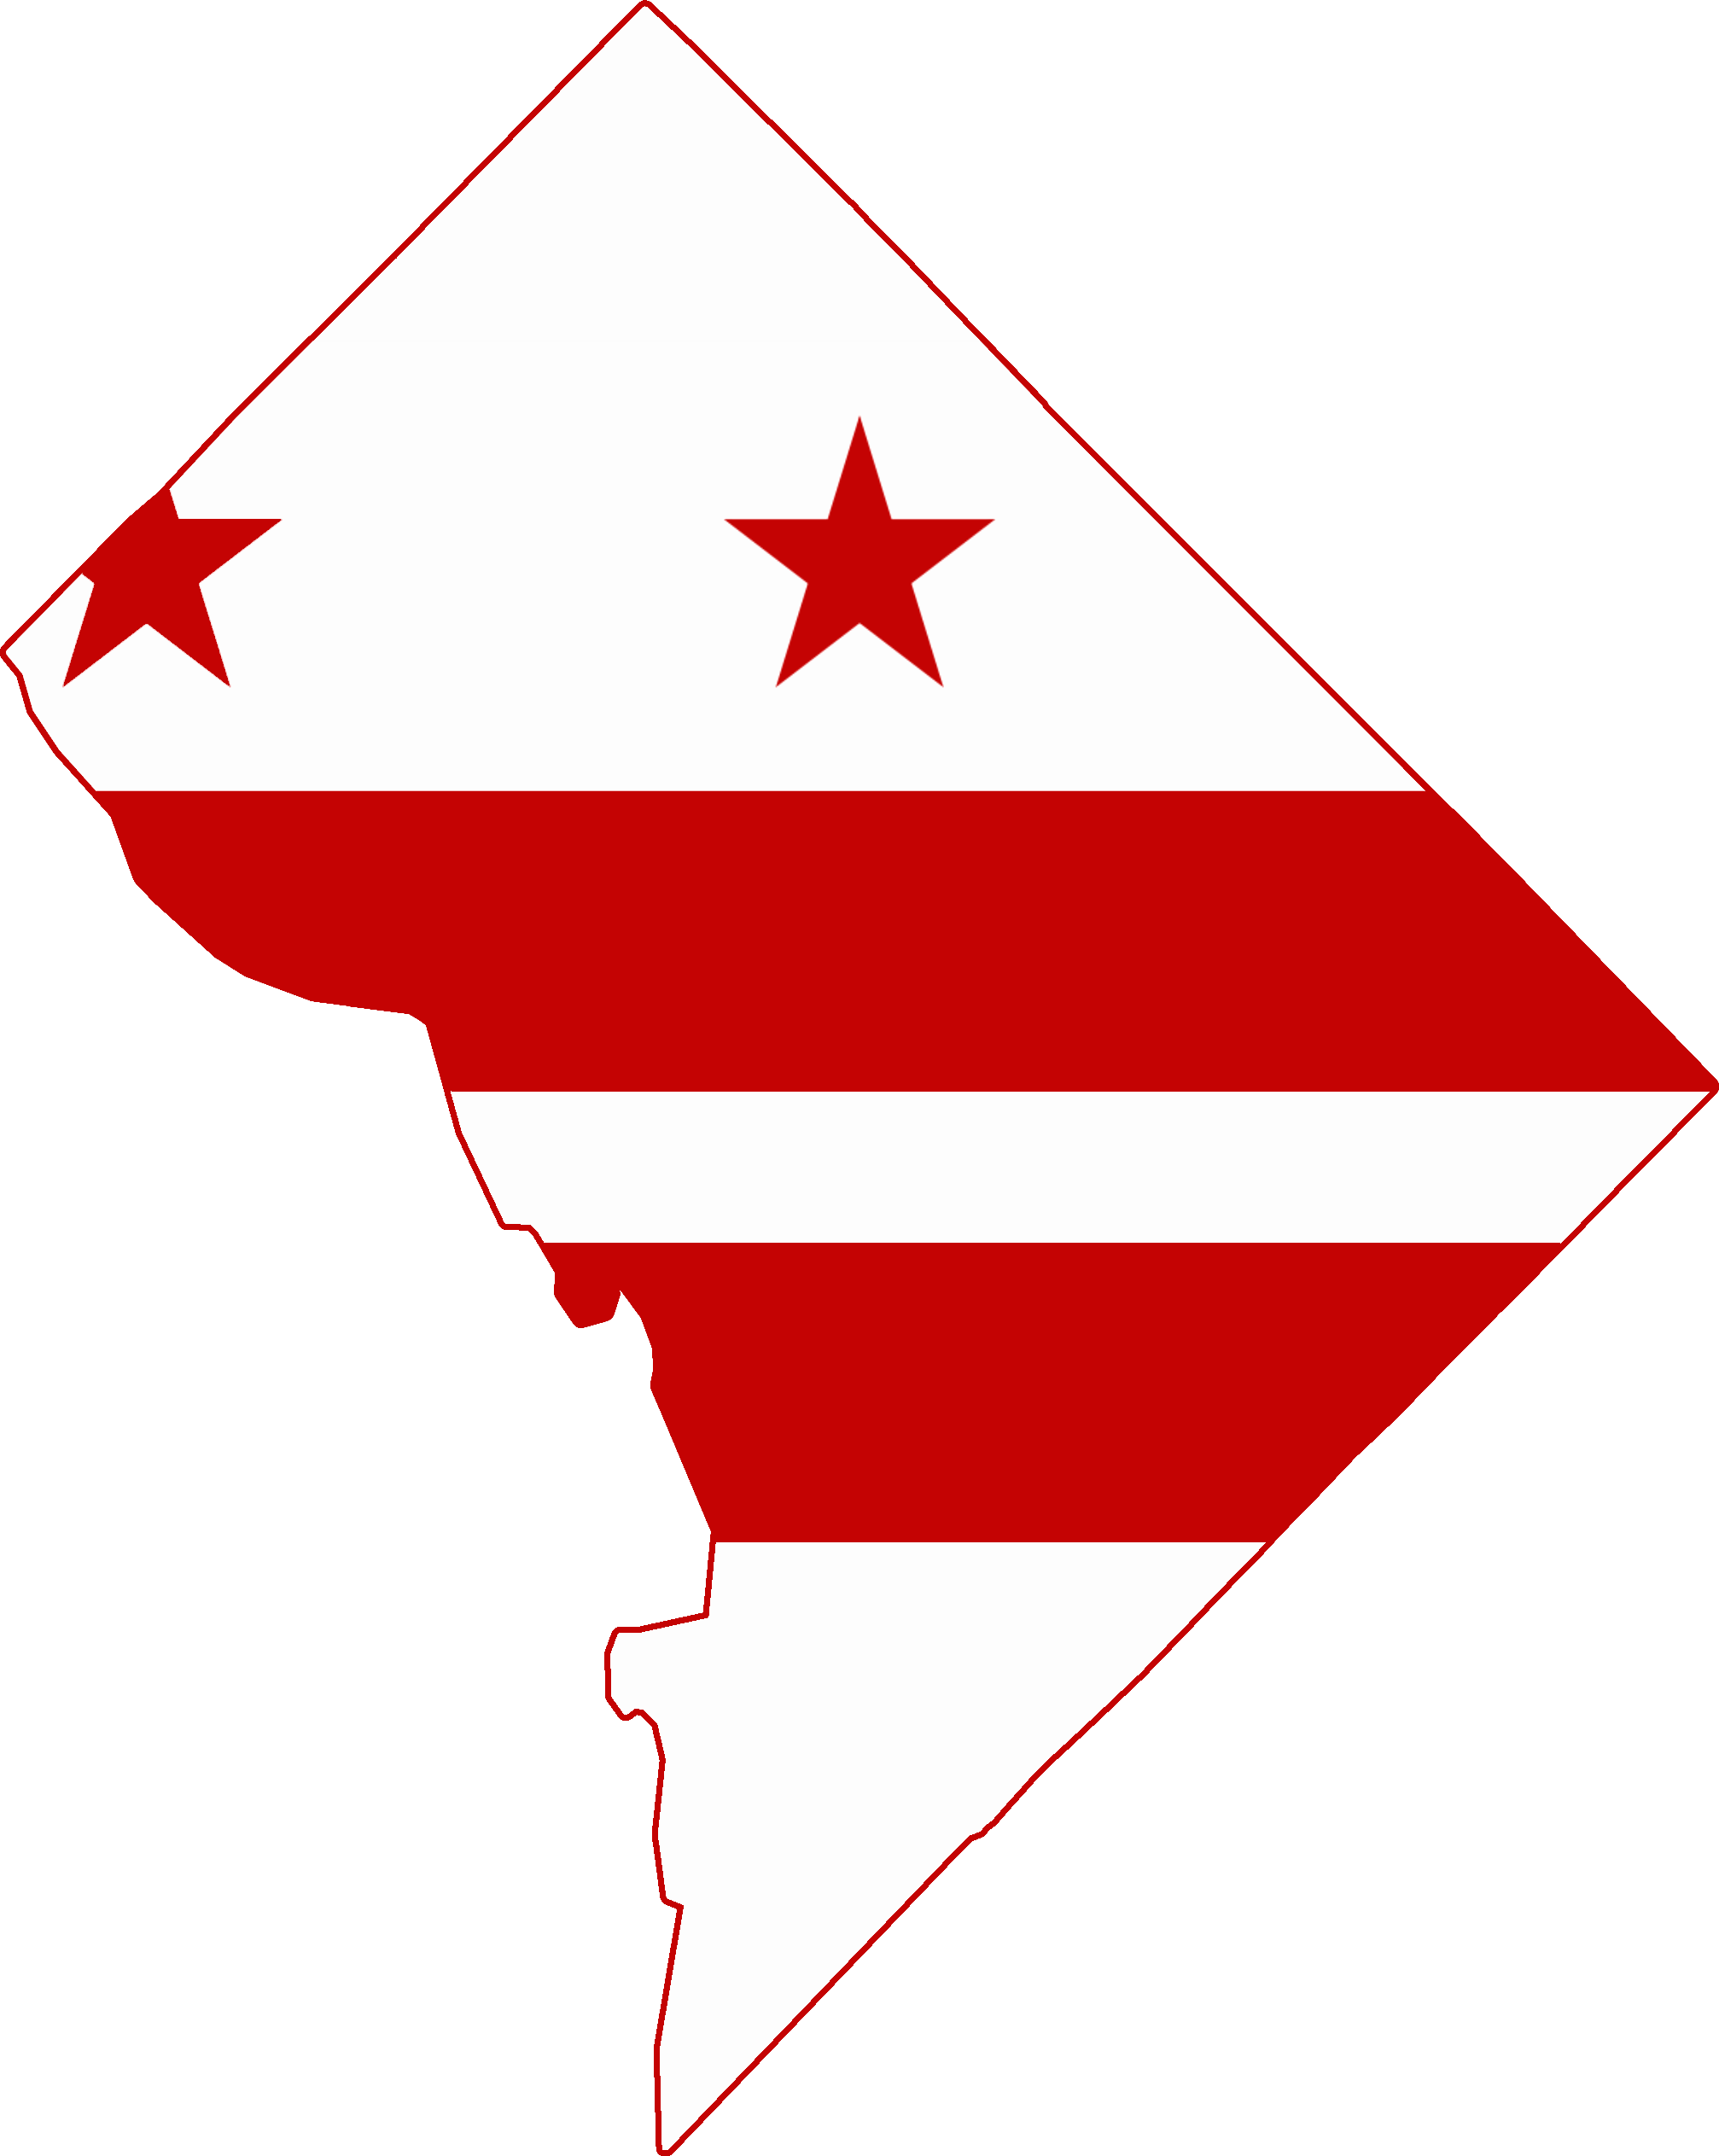 Washington DC Logo